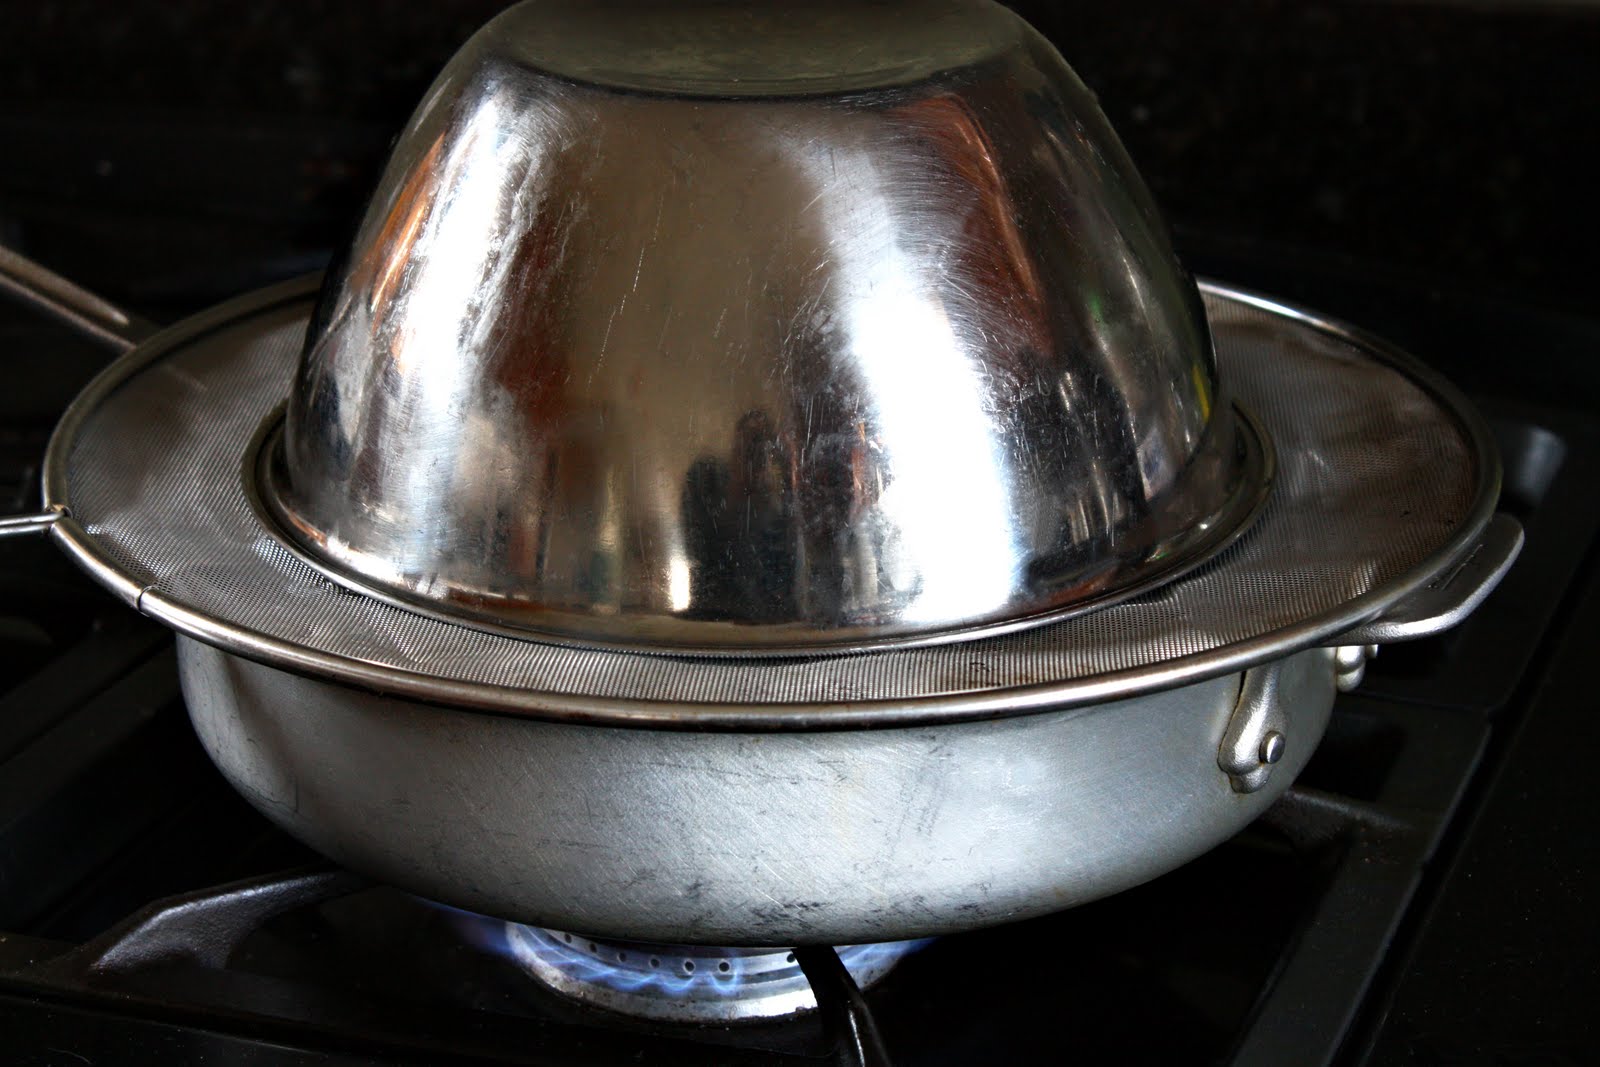 Stainless Steel Steamer Basket Steaming Pot Rice Cooking Utensils Metal